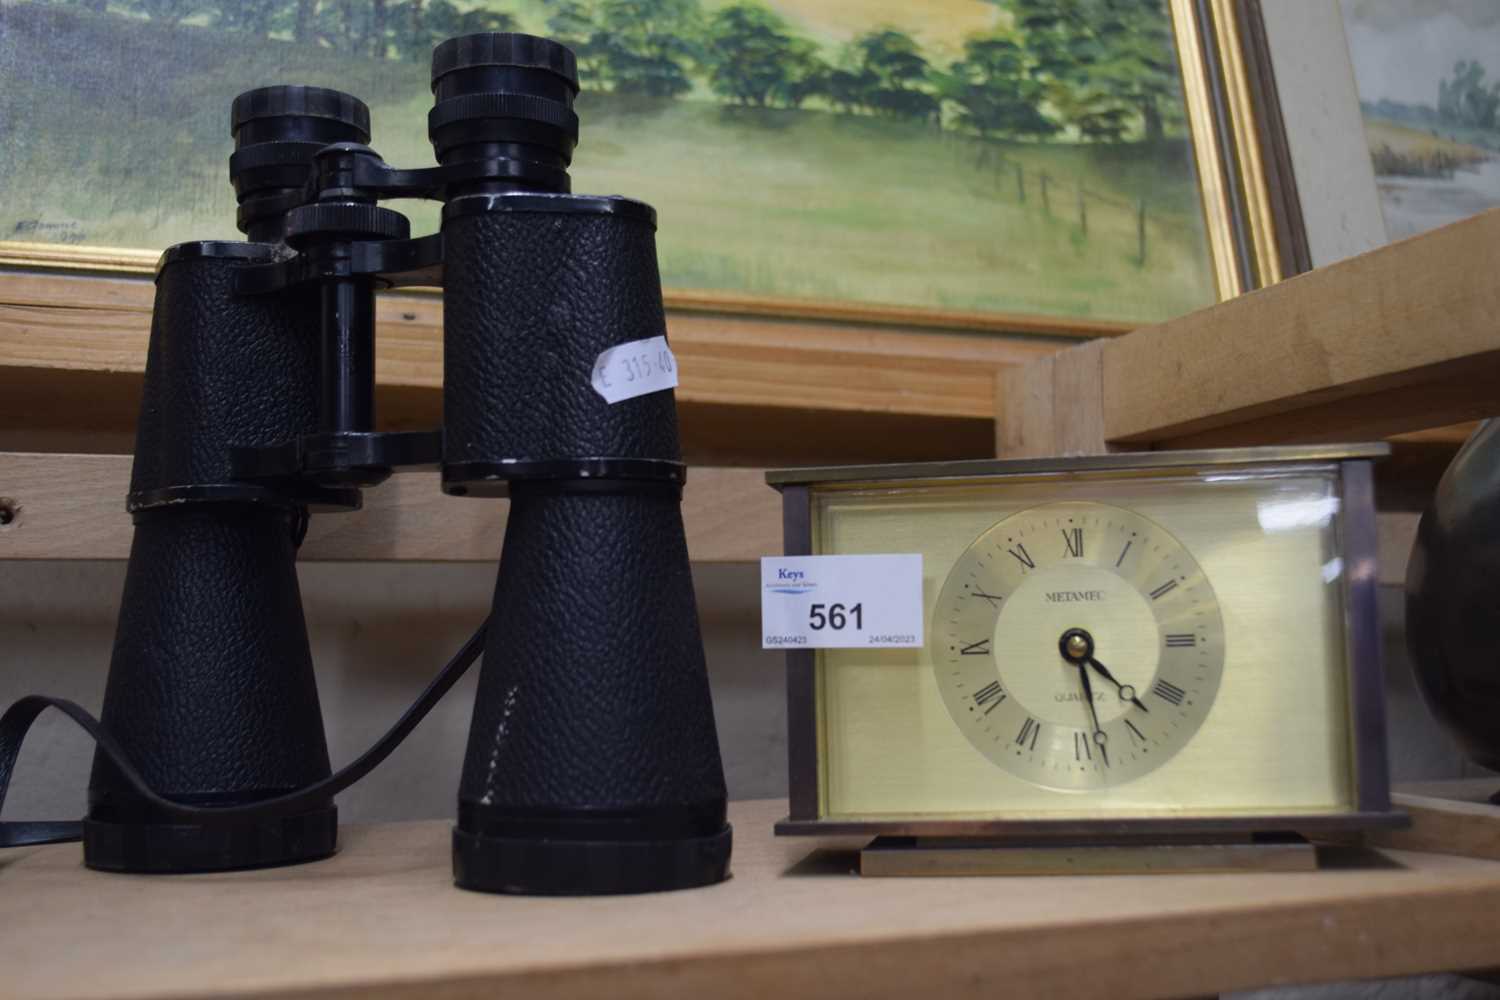 Pair of Mark Scheffel binoculars and a Metamec carriage clock